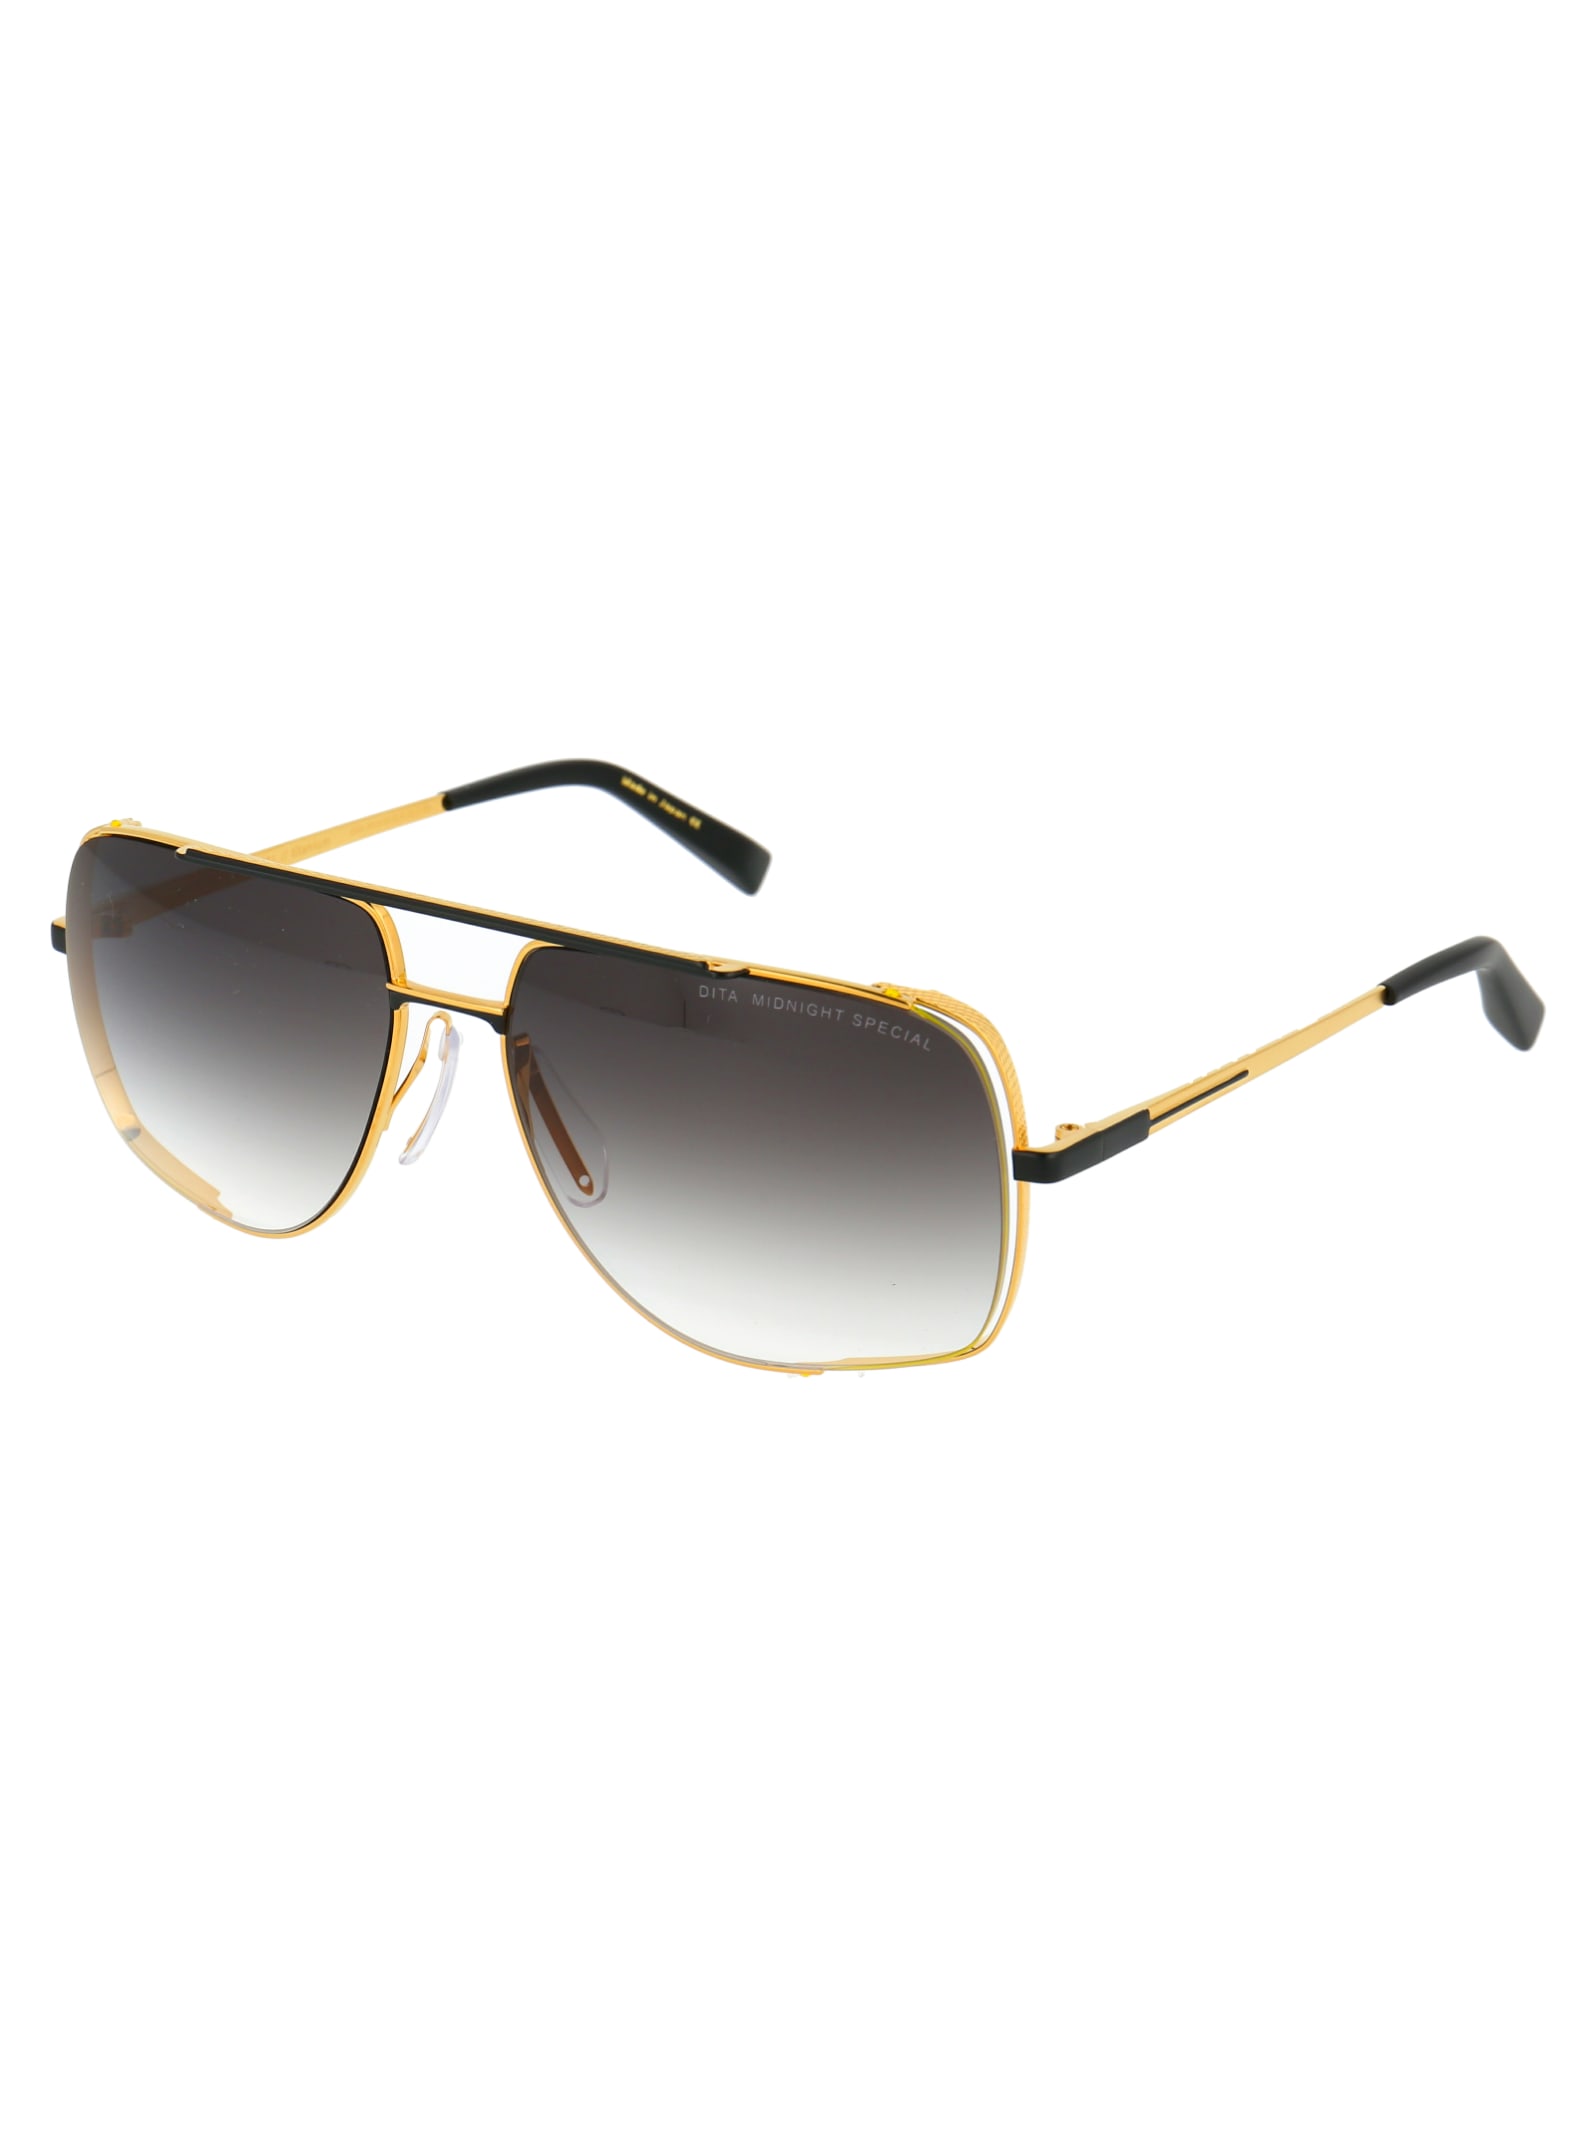 Shop Dita Midnight Special Sunglasses In Yellow Gold - Matte Black